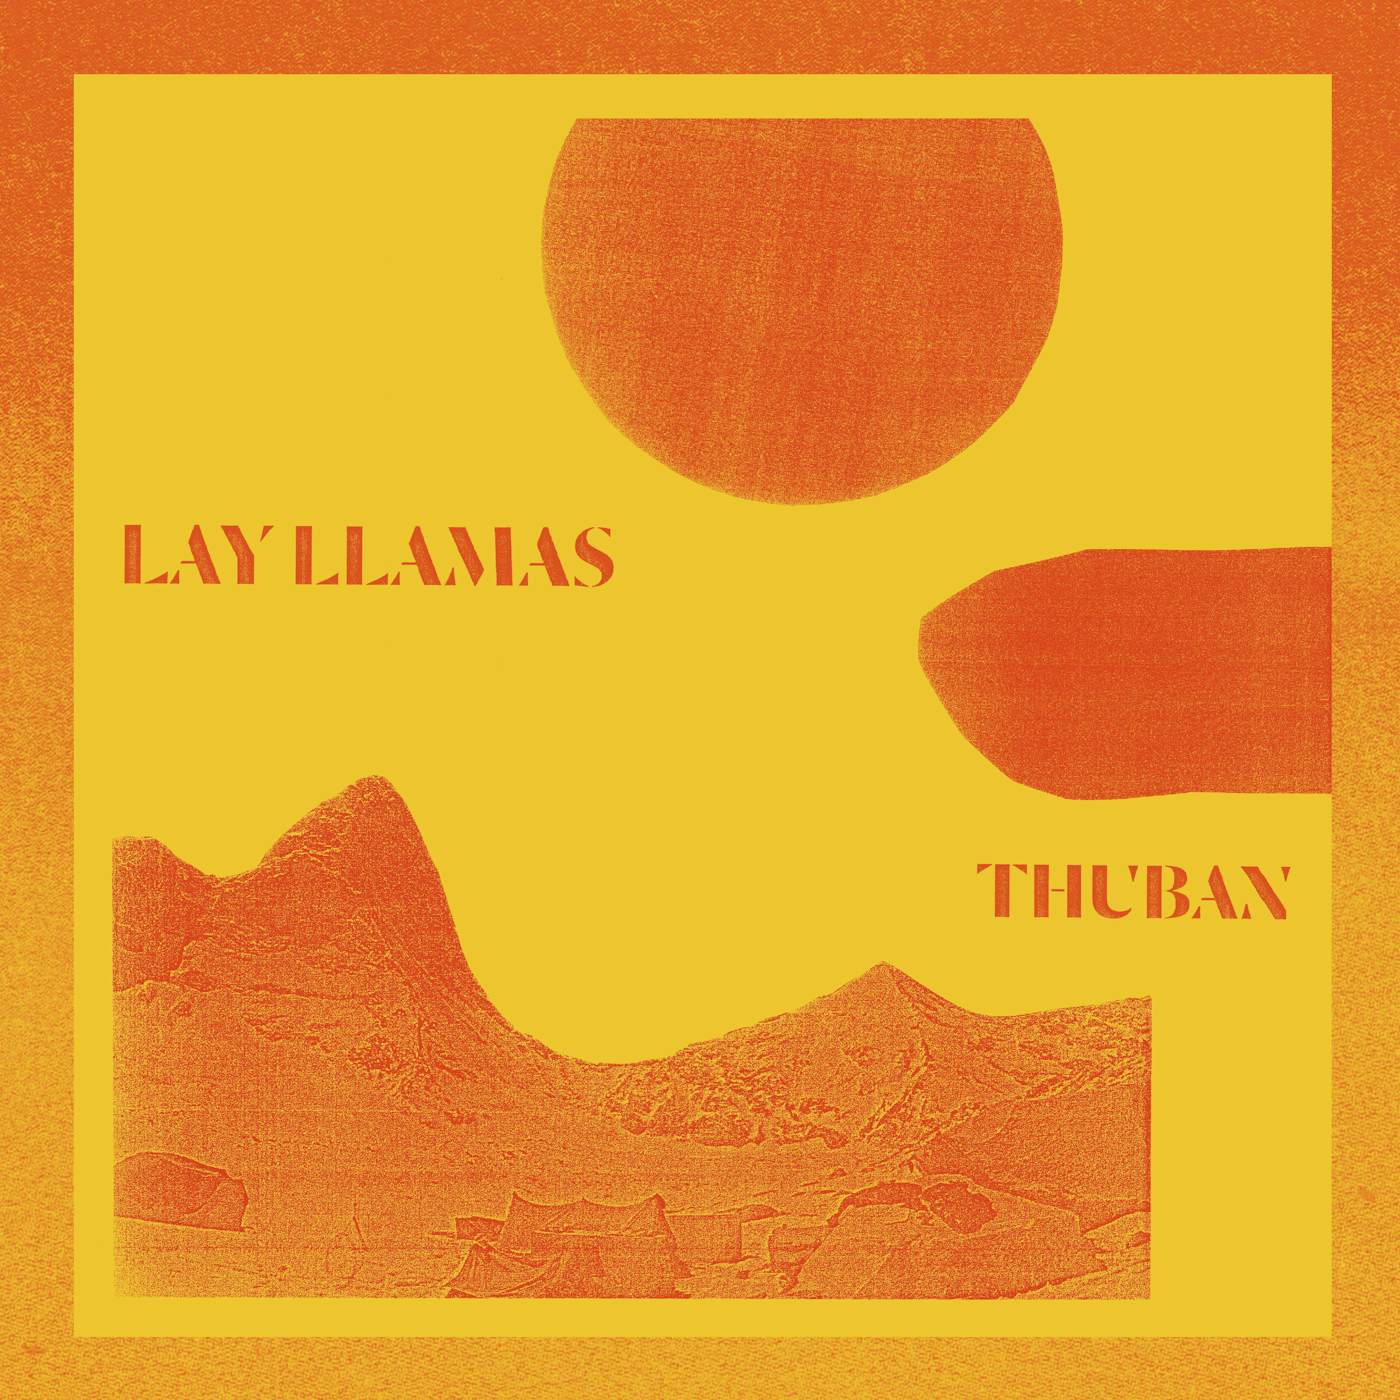 The Lay Llamas 'Thuban' Vinyl Record